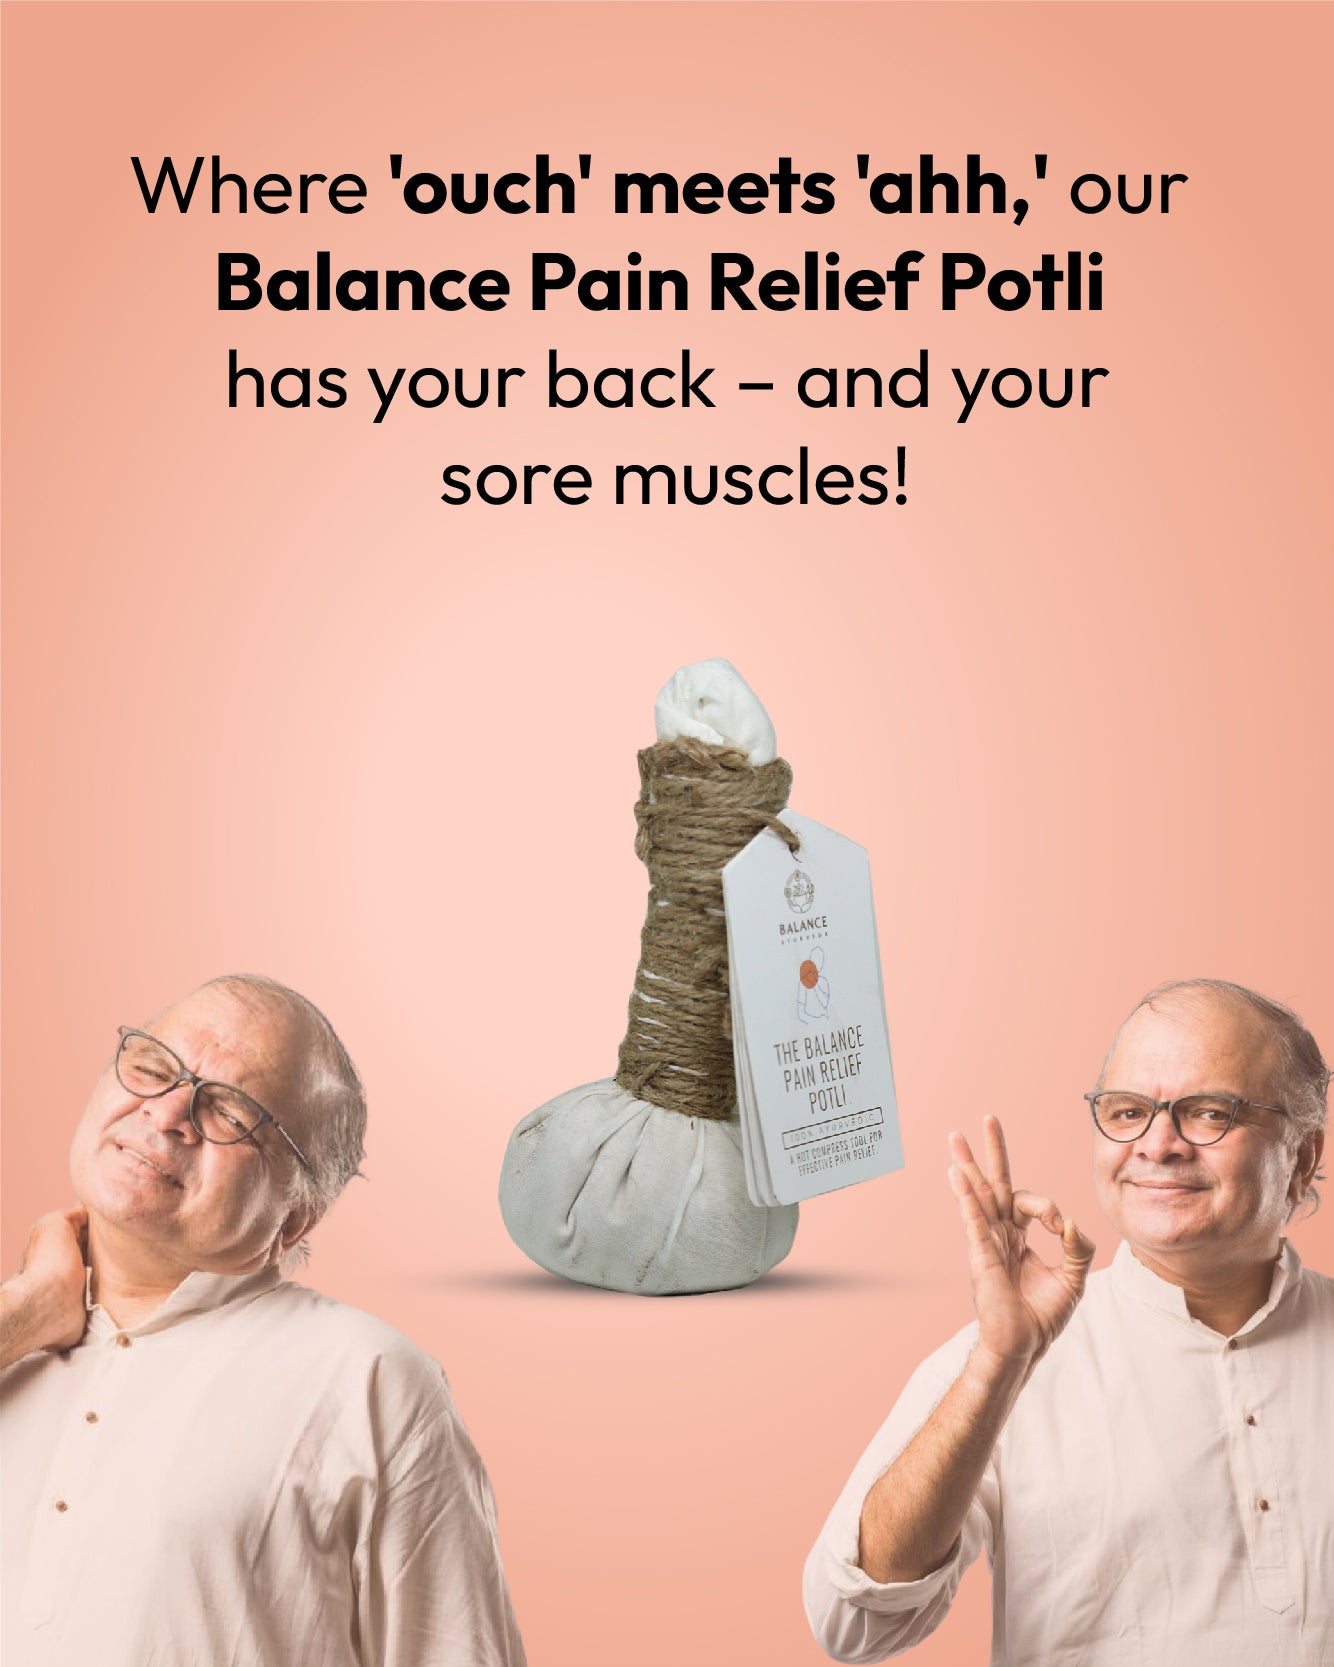 The Balance Pain Relief Potli